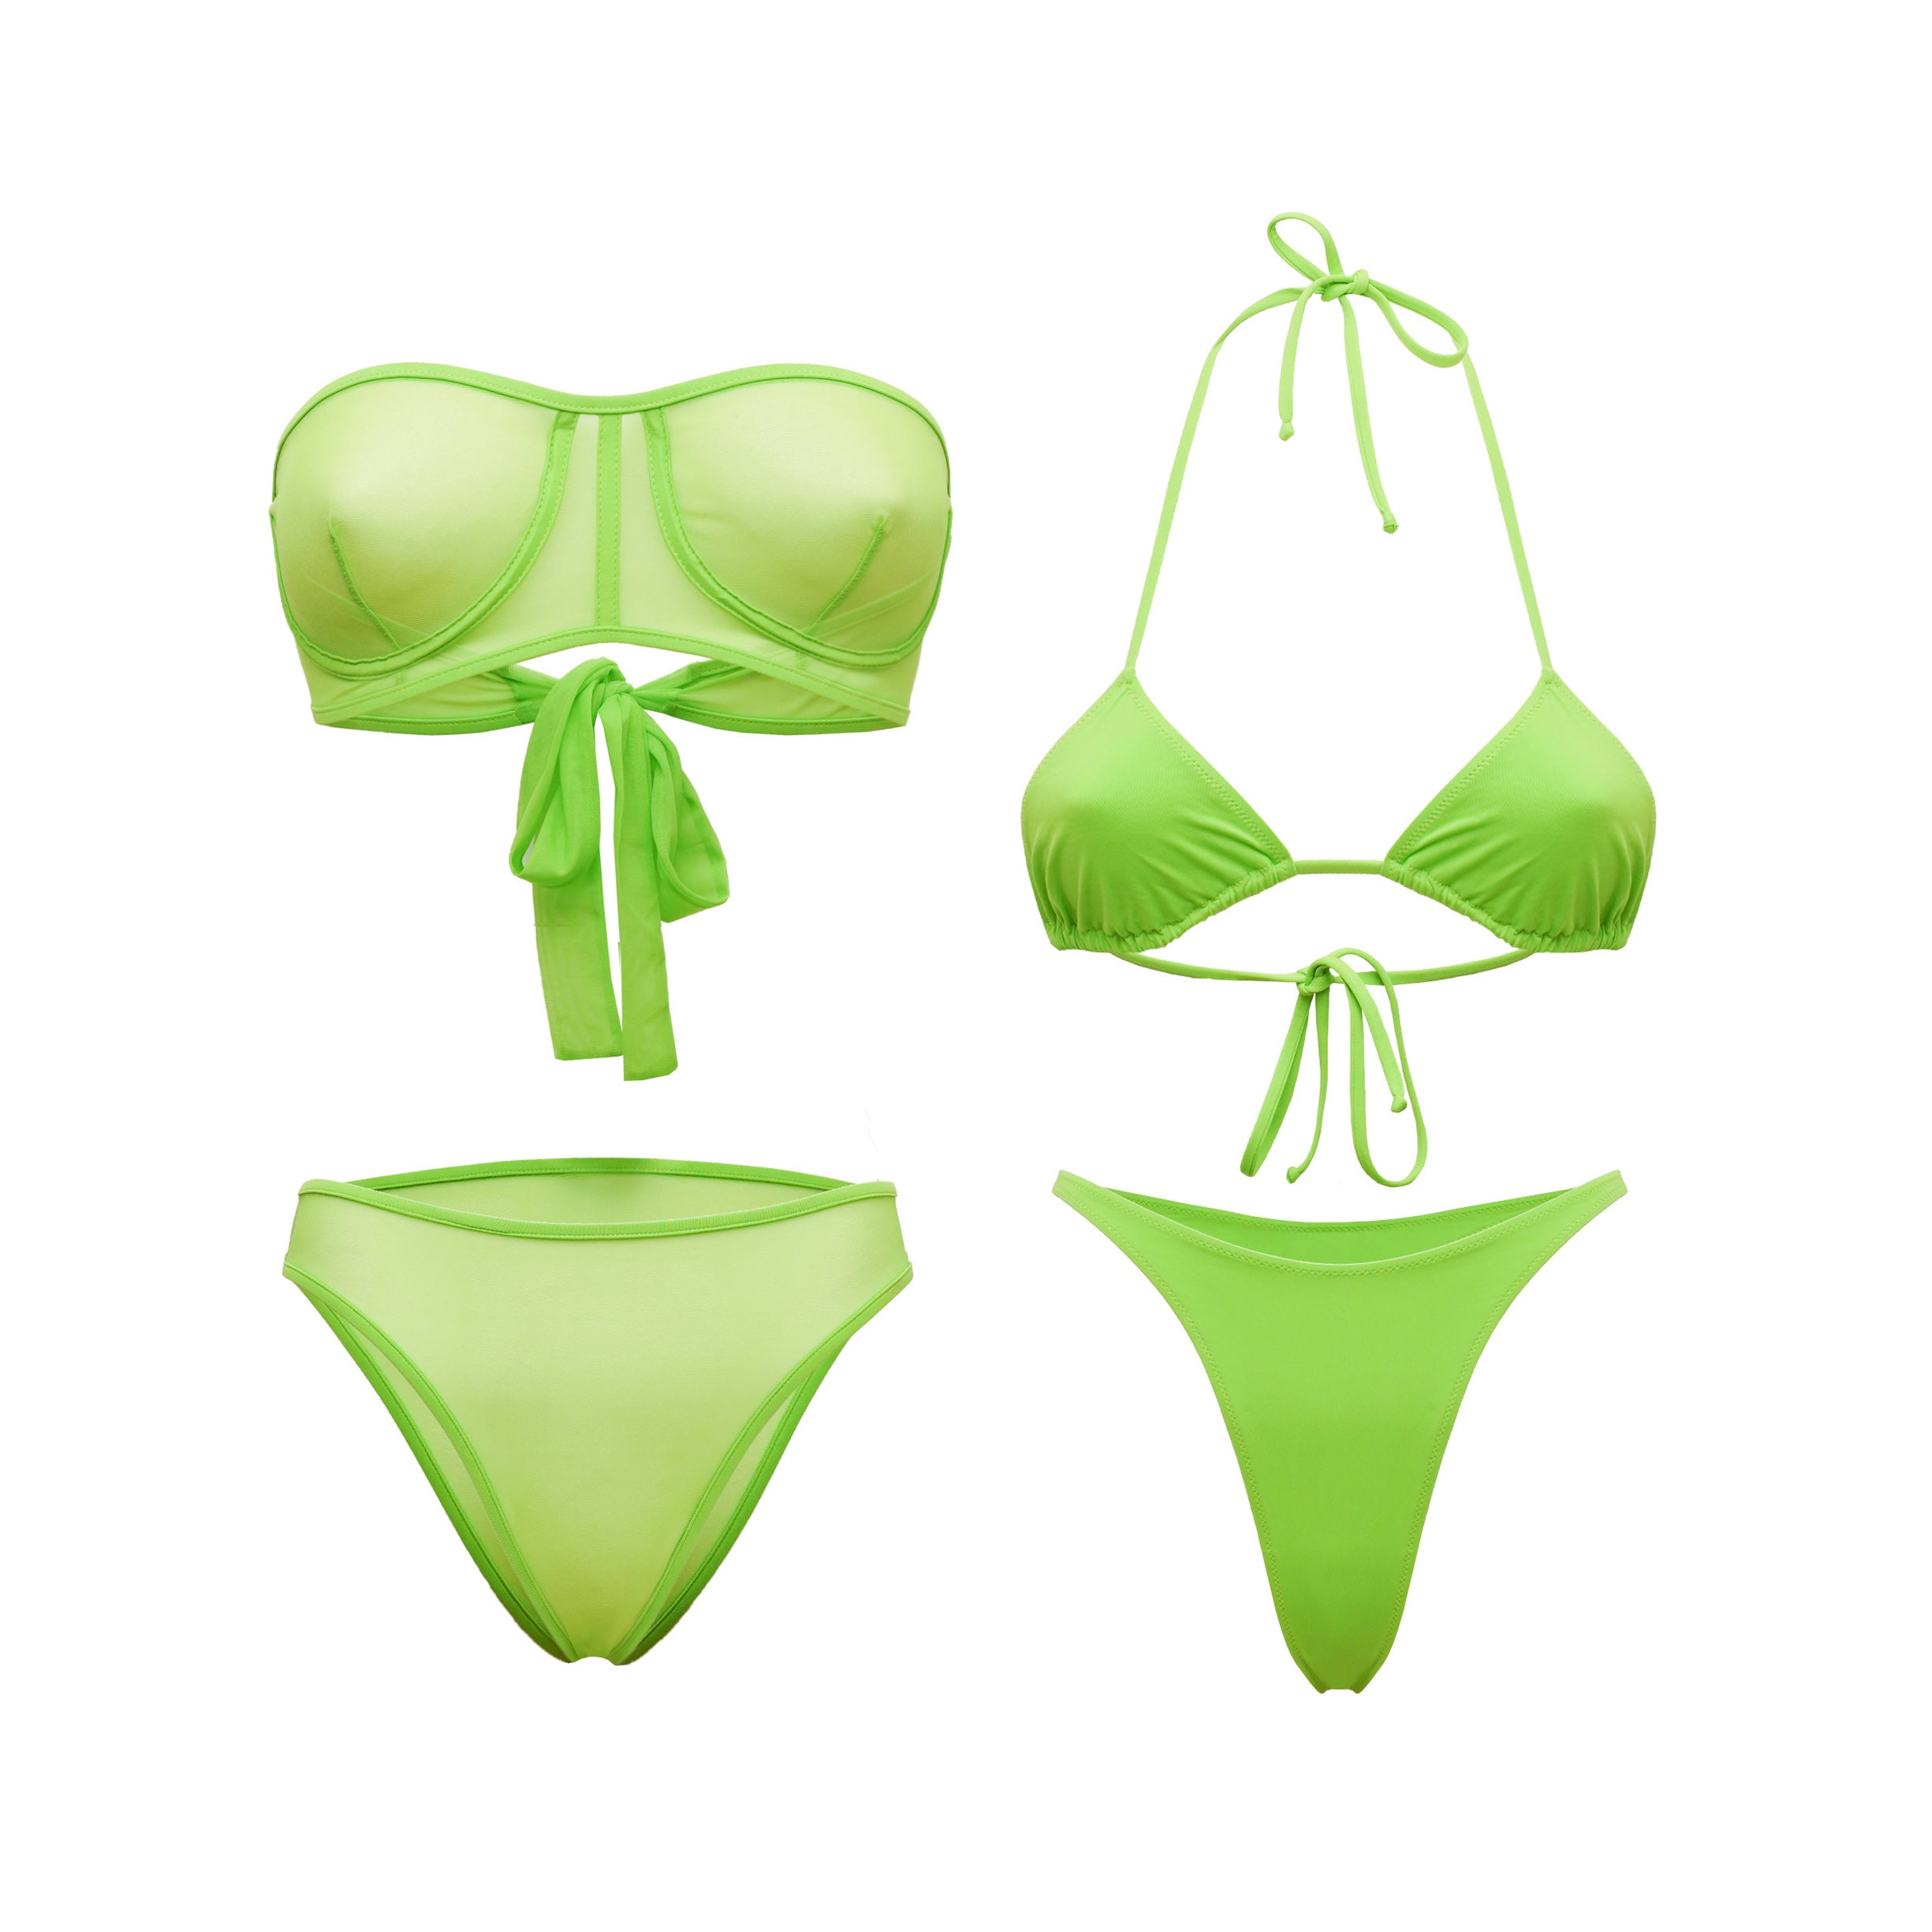 Edele capaciteit De andere dag EXOTIC Green Bikini Set – Hot Lemon Collection